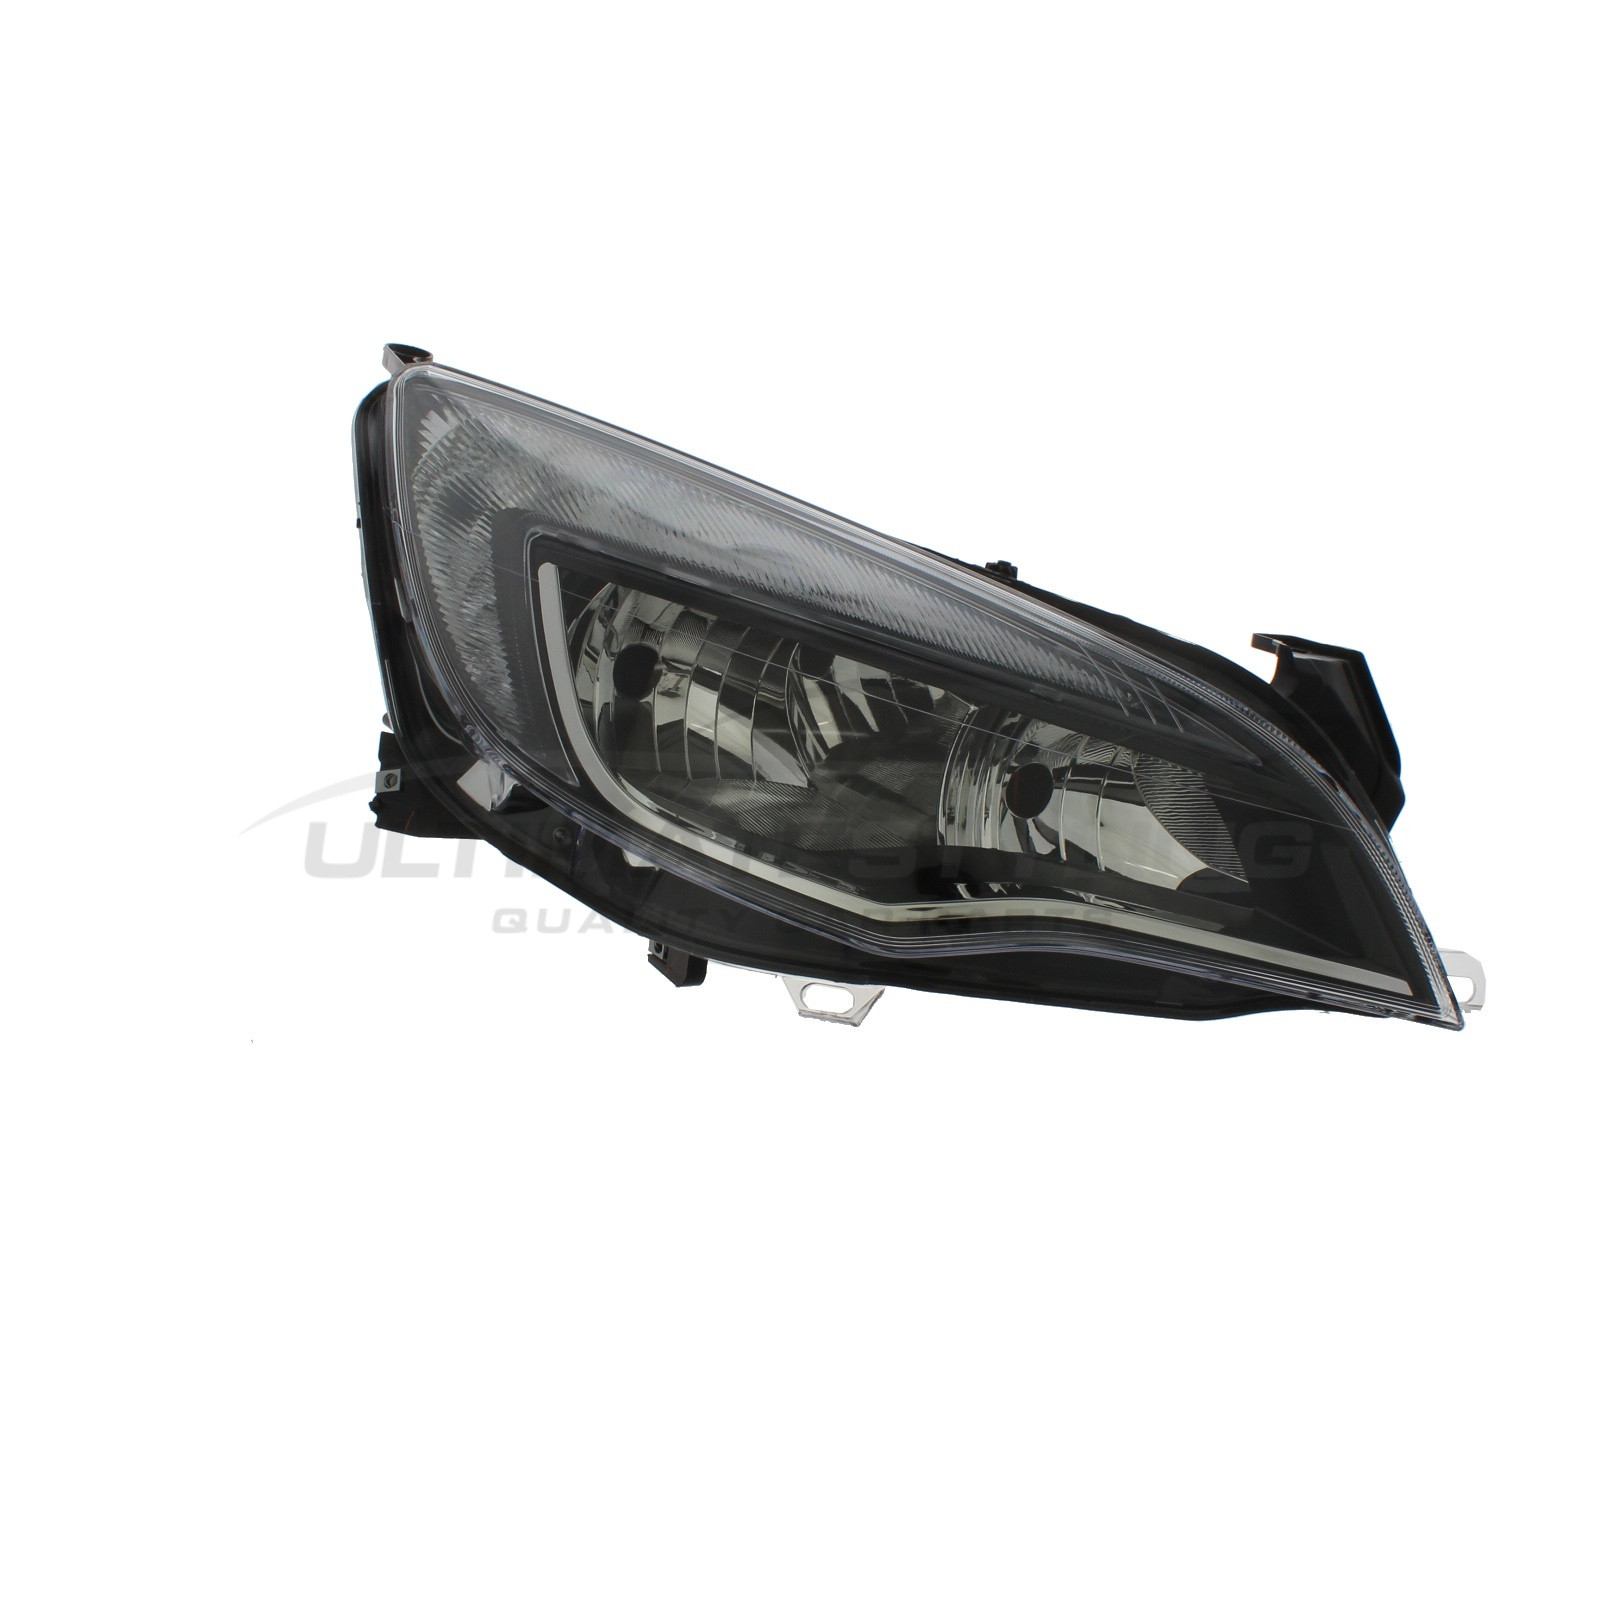 Headlight / Headlamp for Vauxhall Astra